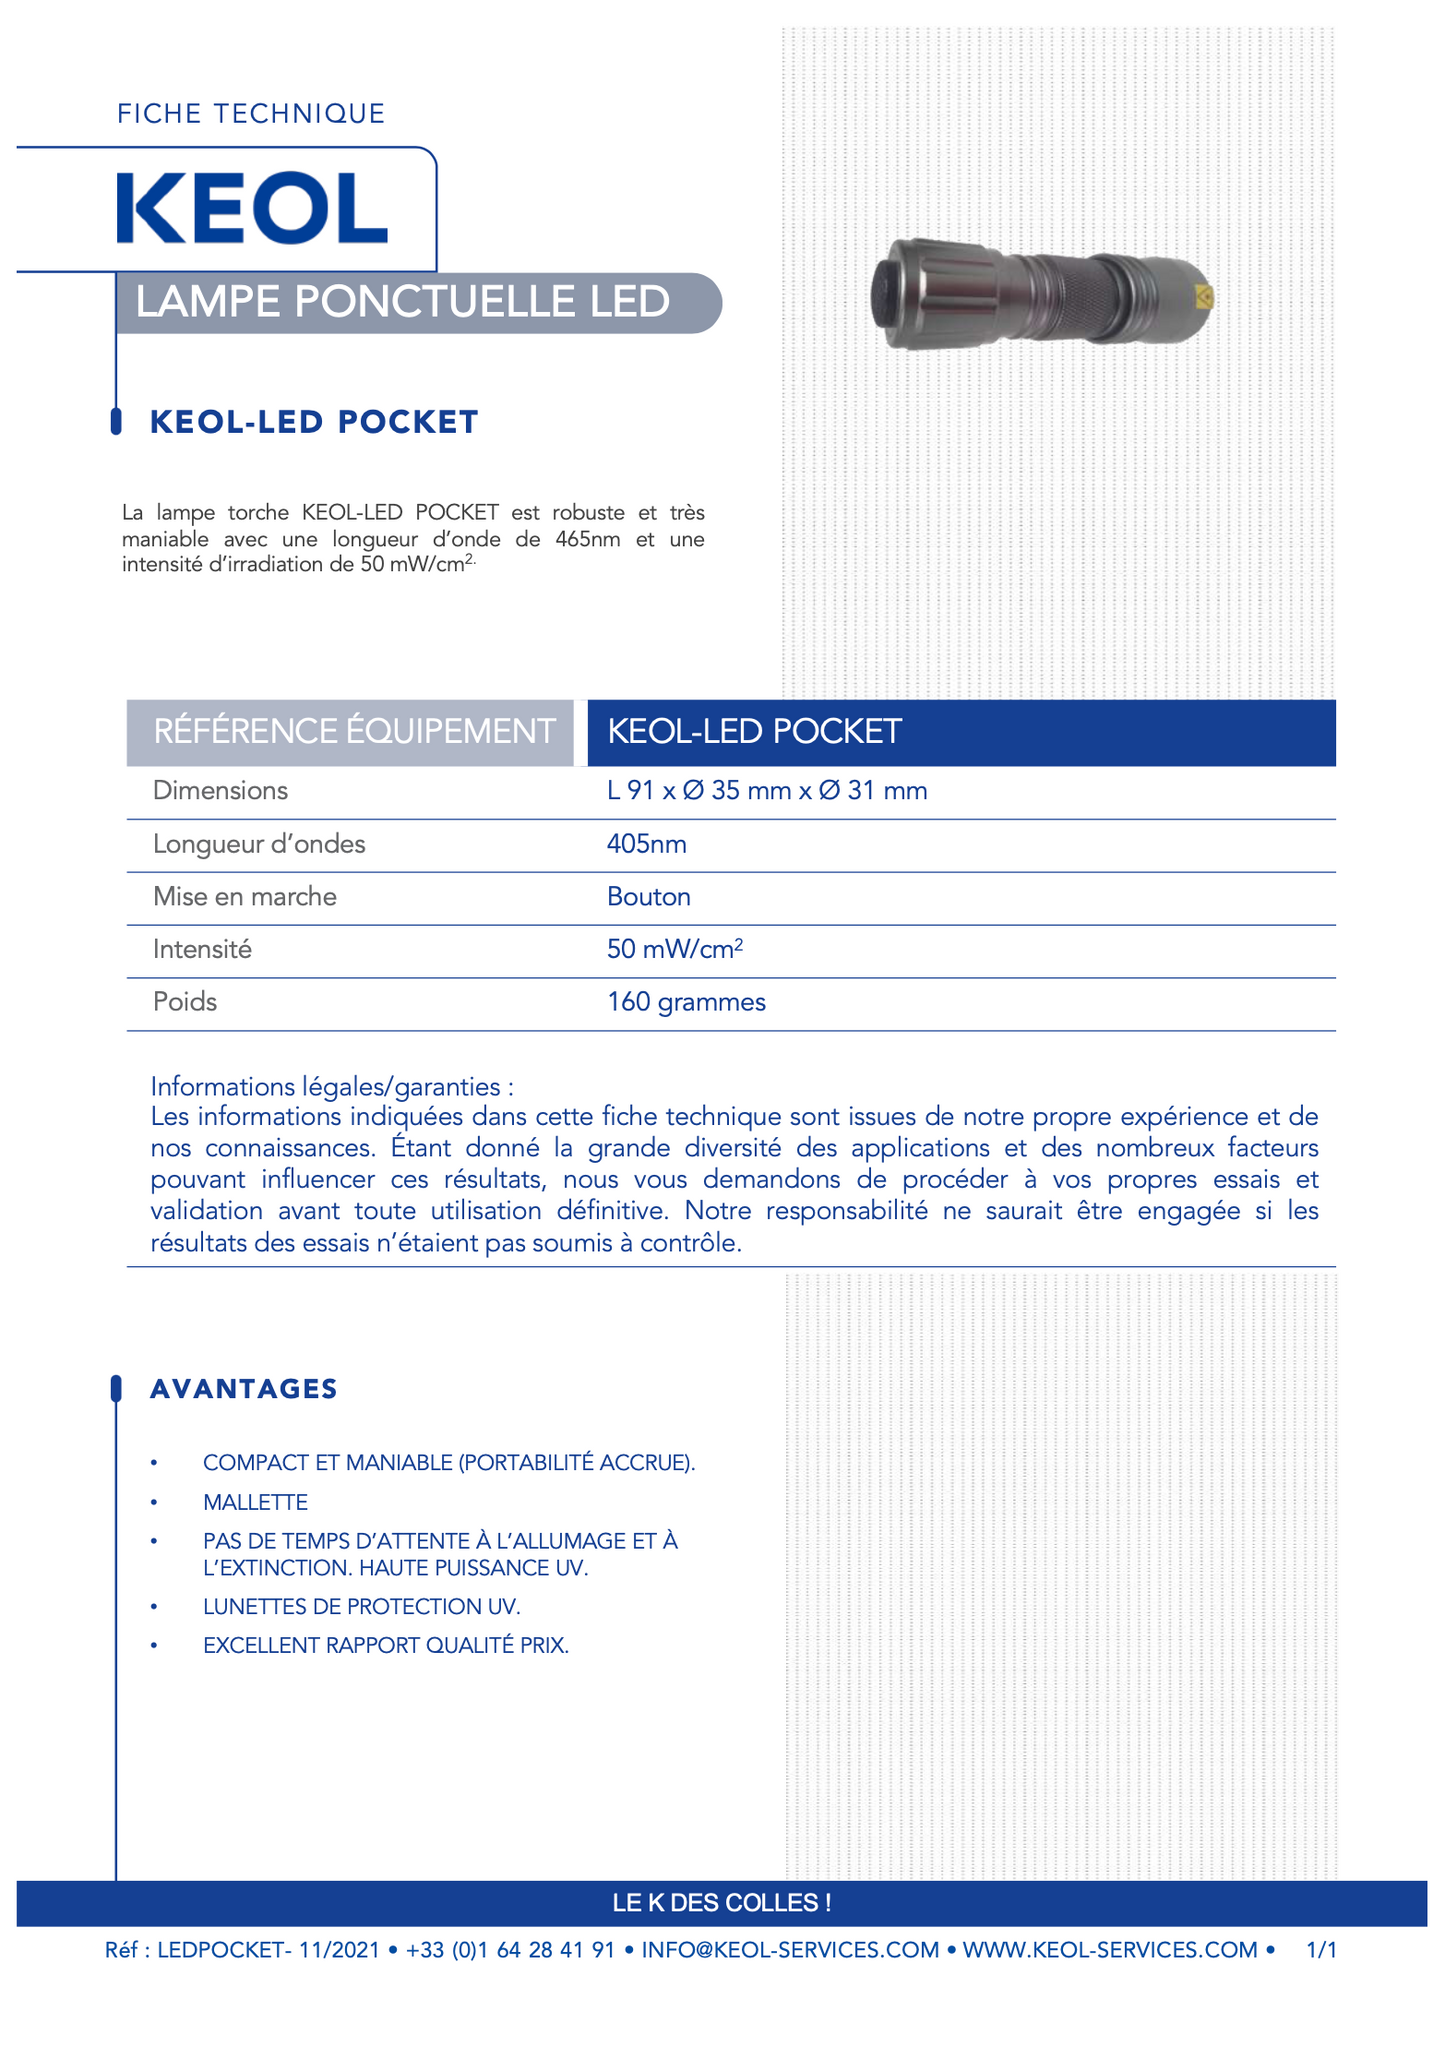 Lampe ponctuelle KEOL-LED POCKET 50mW/cm2